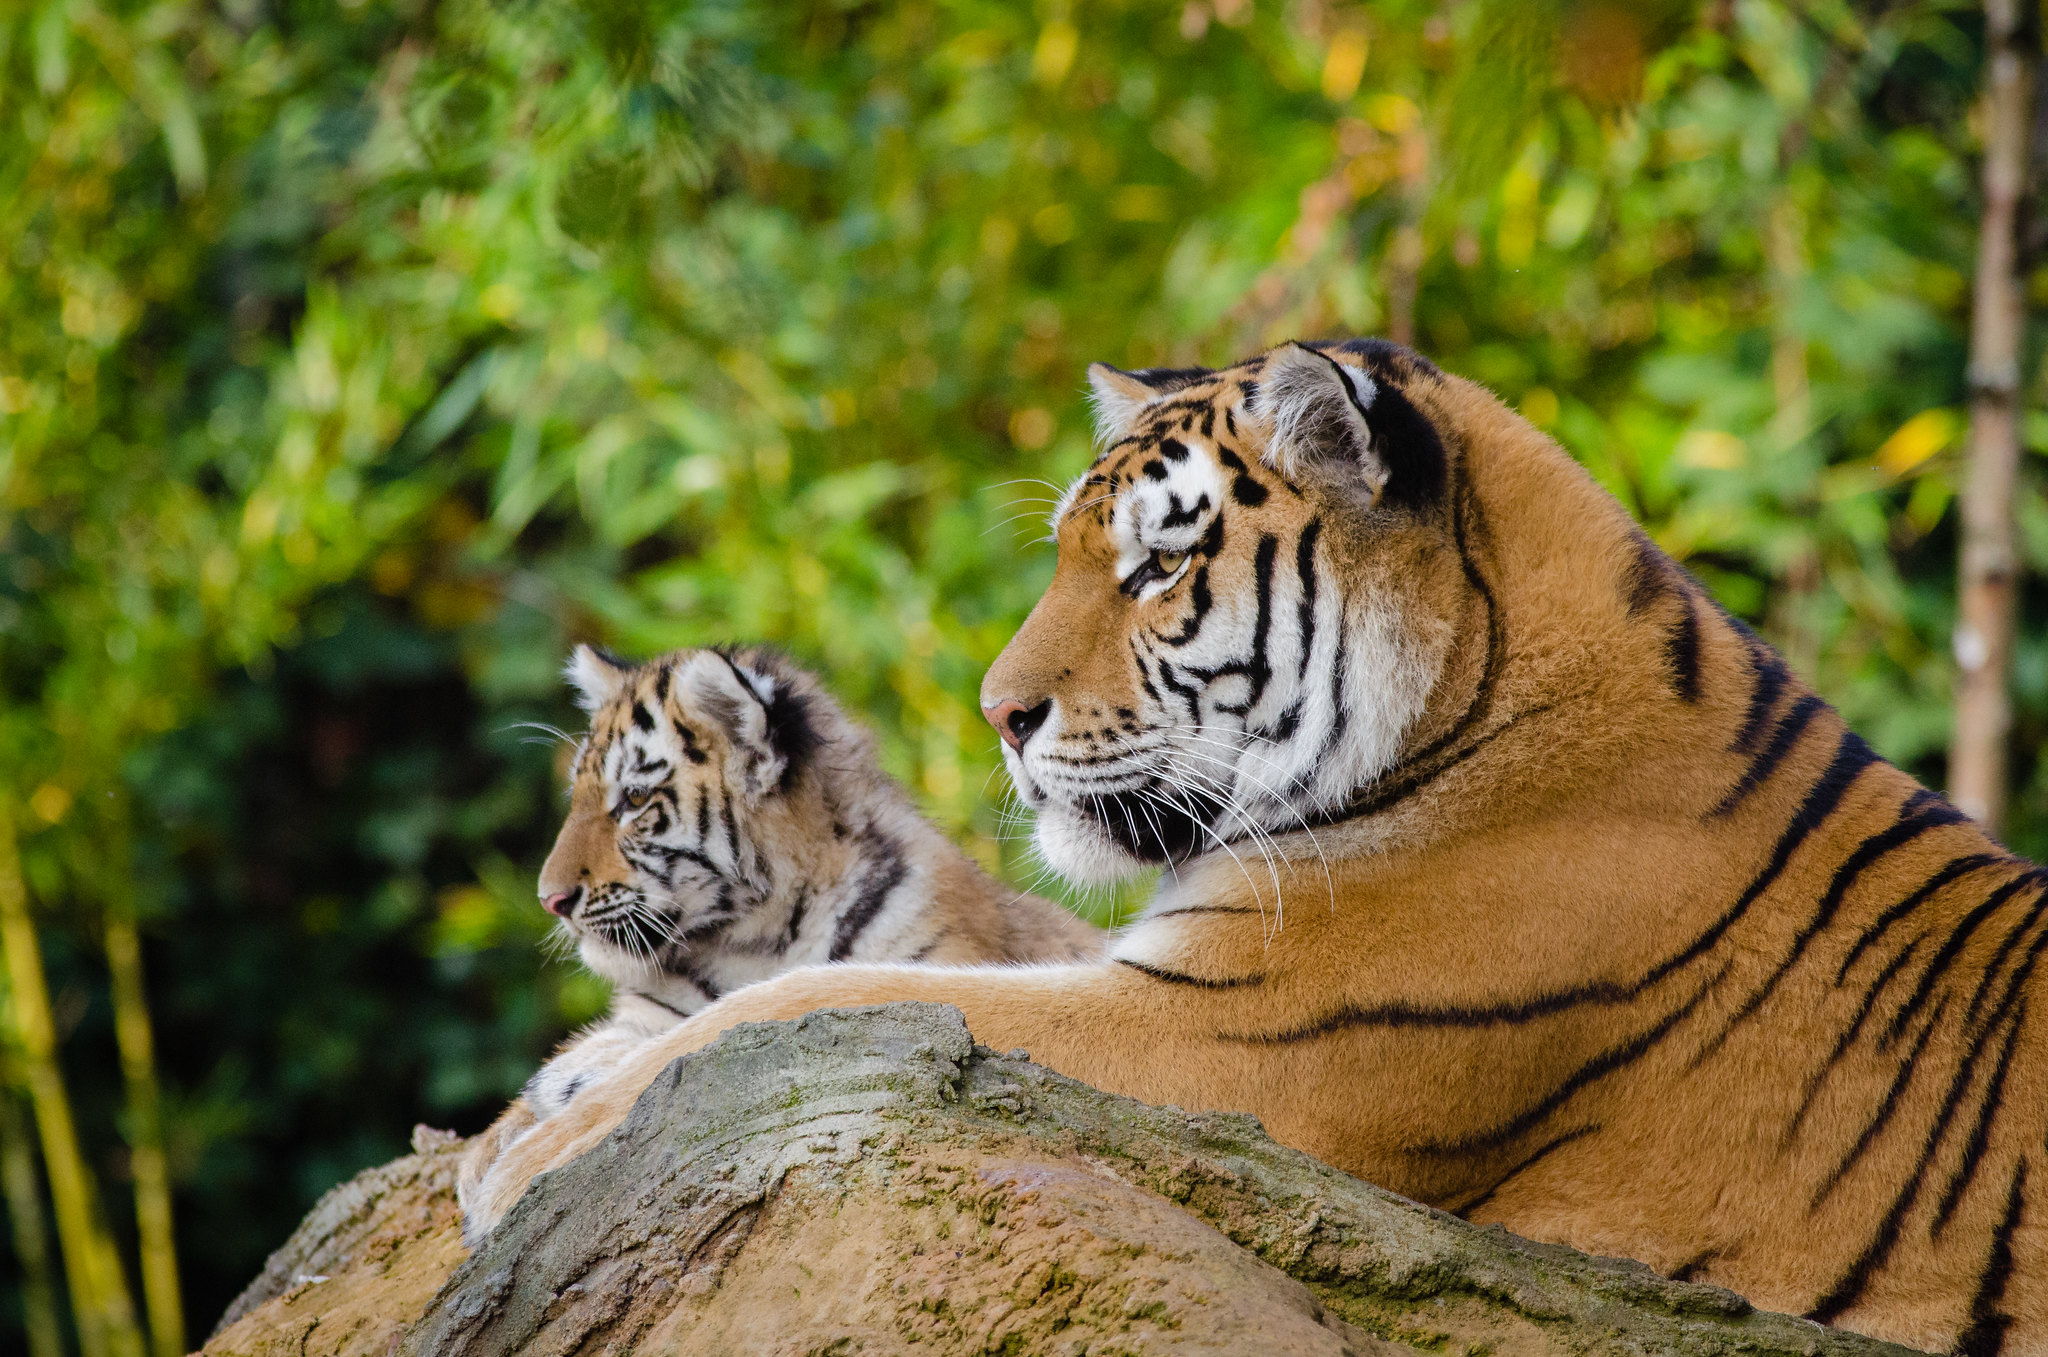 Siberian Tiger Mom with Cub by Mathias Appel via Flickr